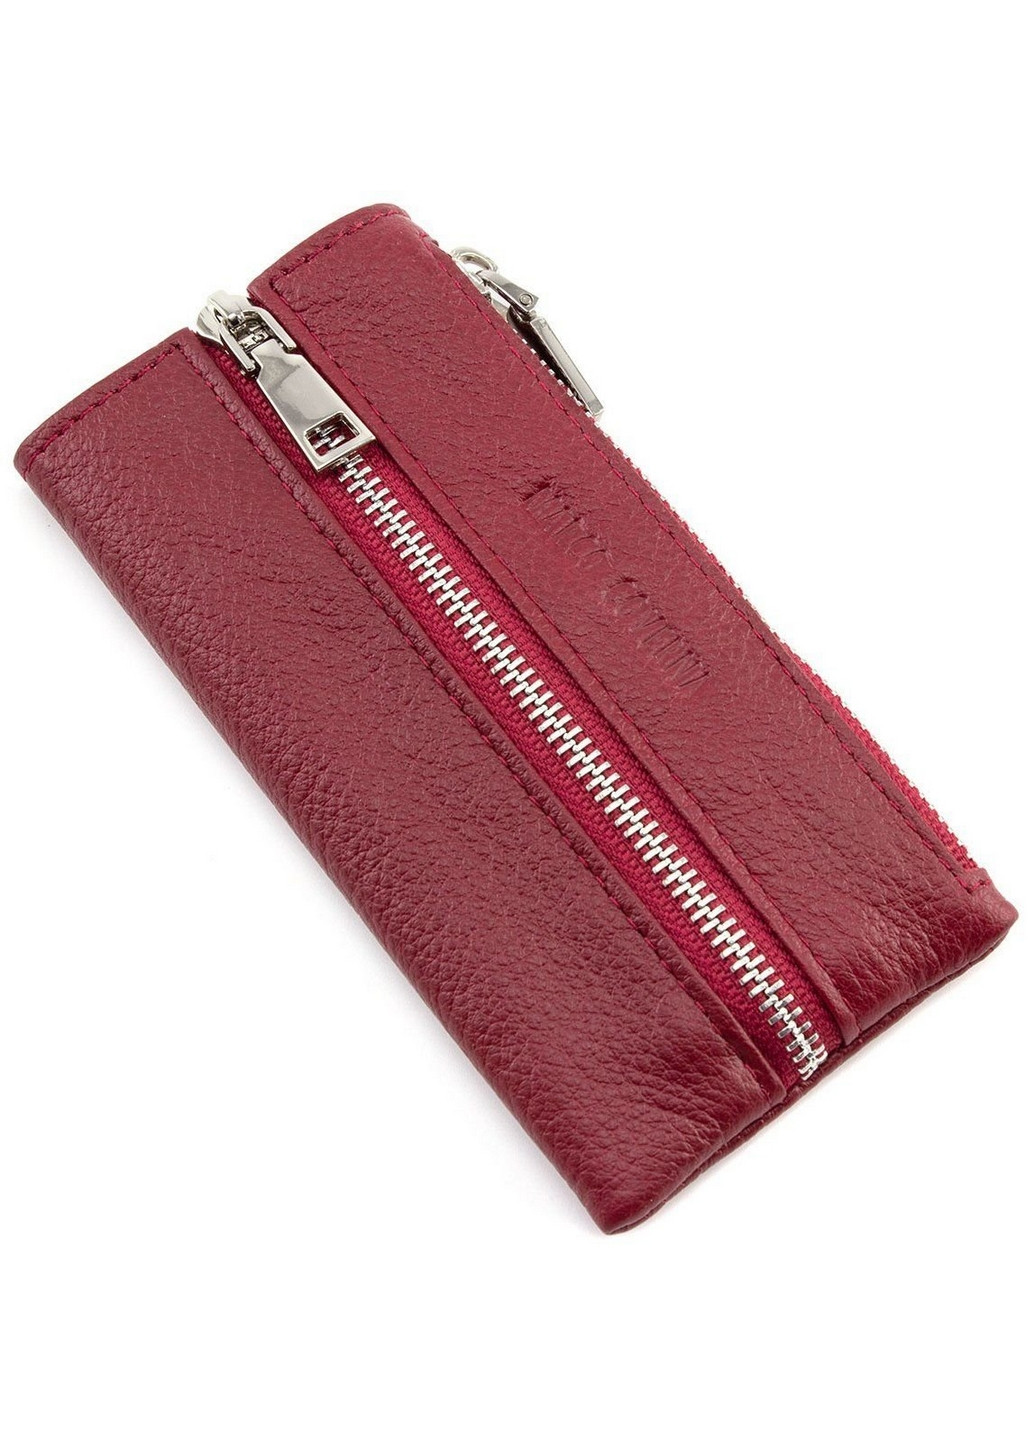 Женский кожаный кошелек 13,5х7х1,5 см Marco Coverna (260171412)